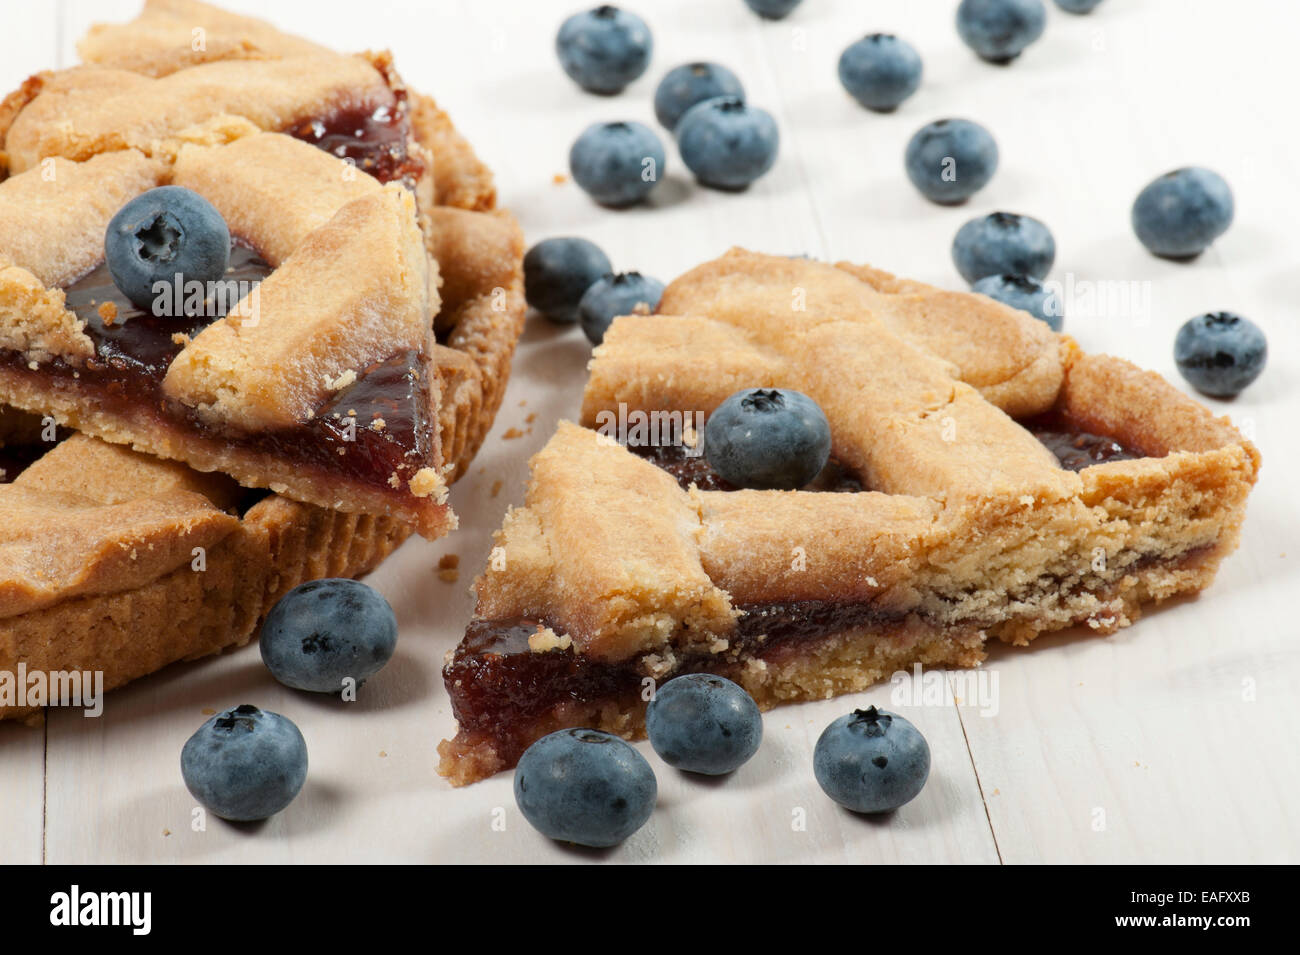 slice of blueberry tart on wooden table Stock Photo